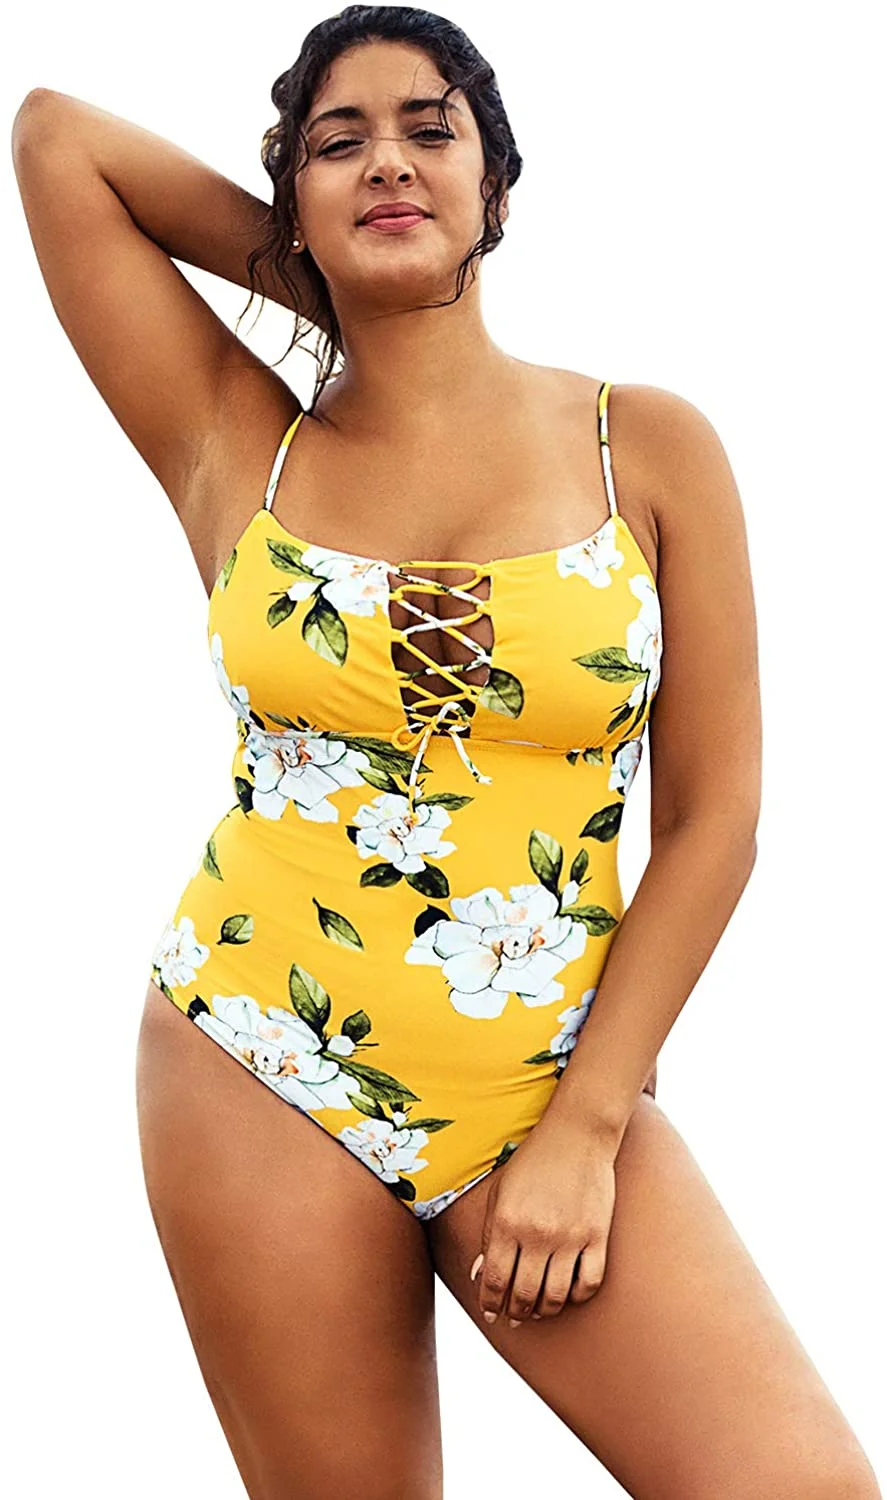 Women's Plus Size One Piece Swimsuit Floral Lace Adjustable Bikini